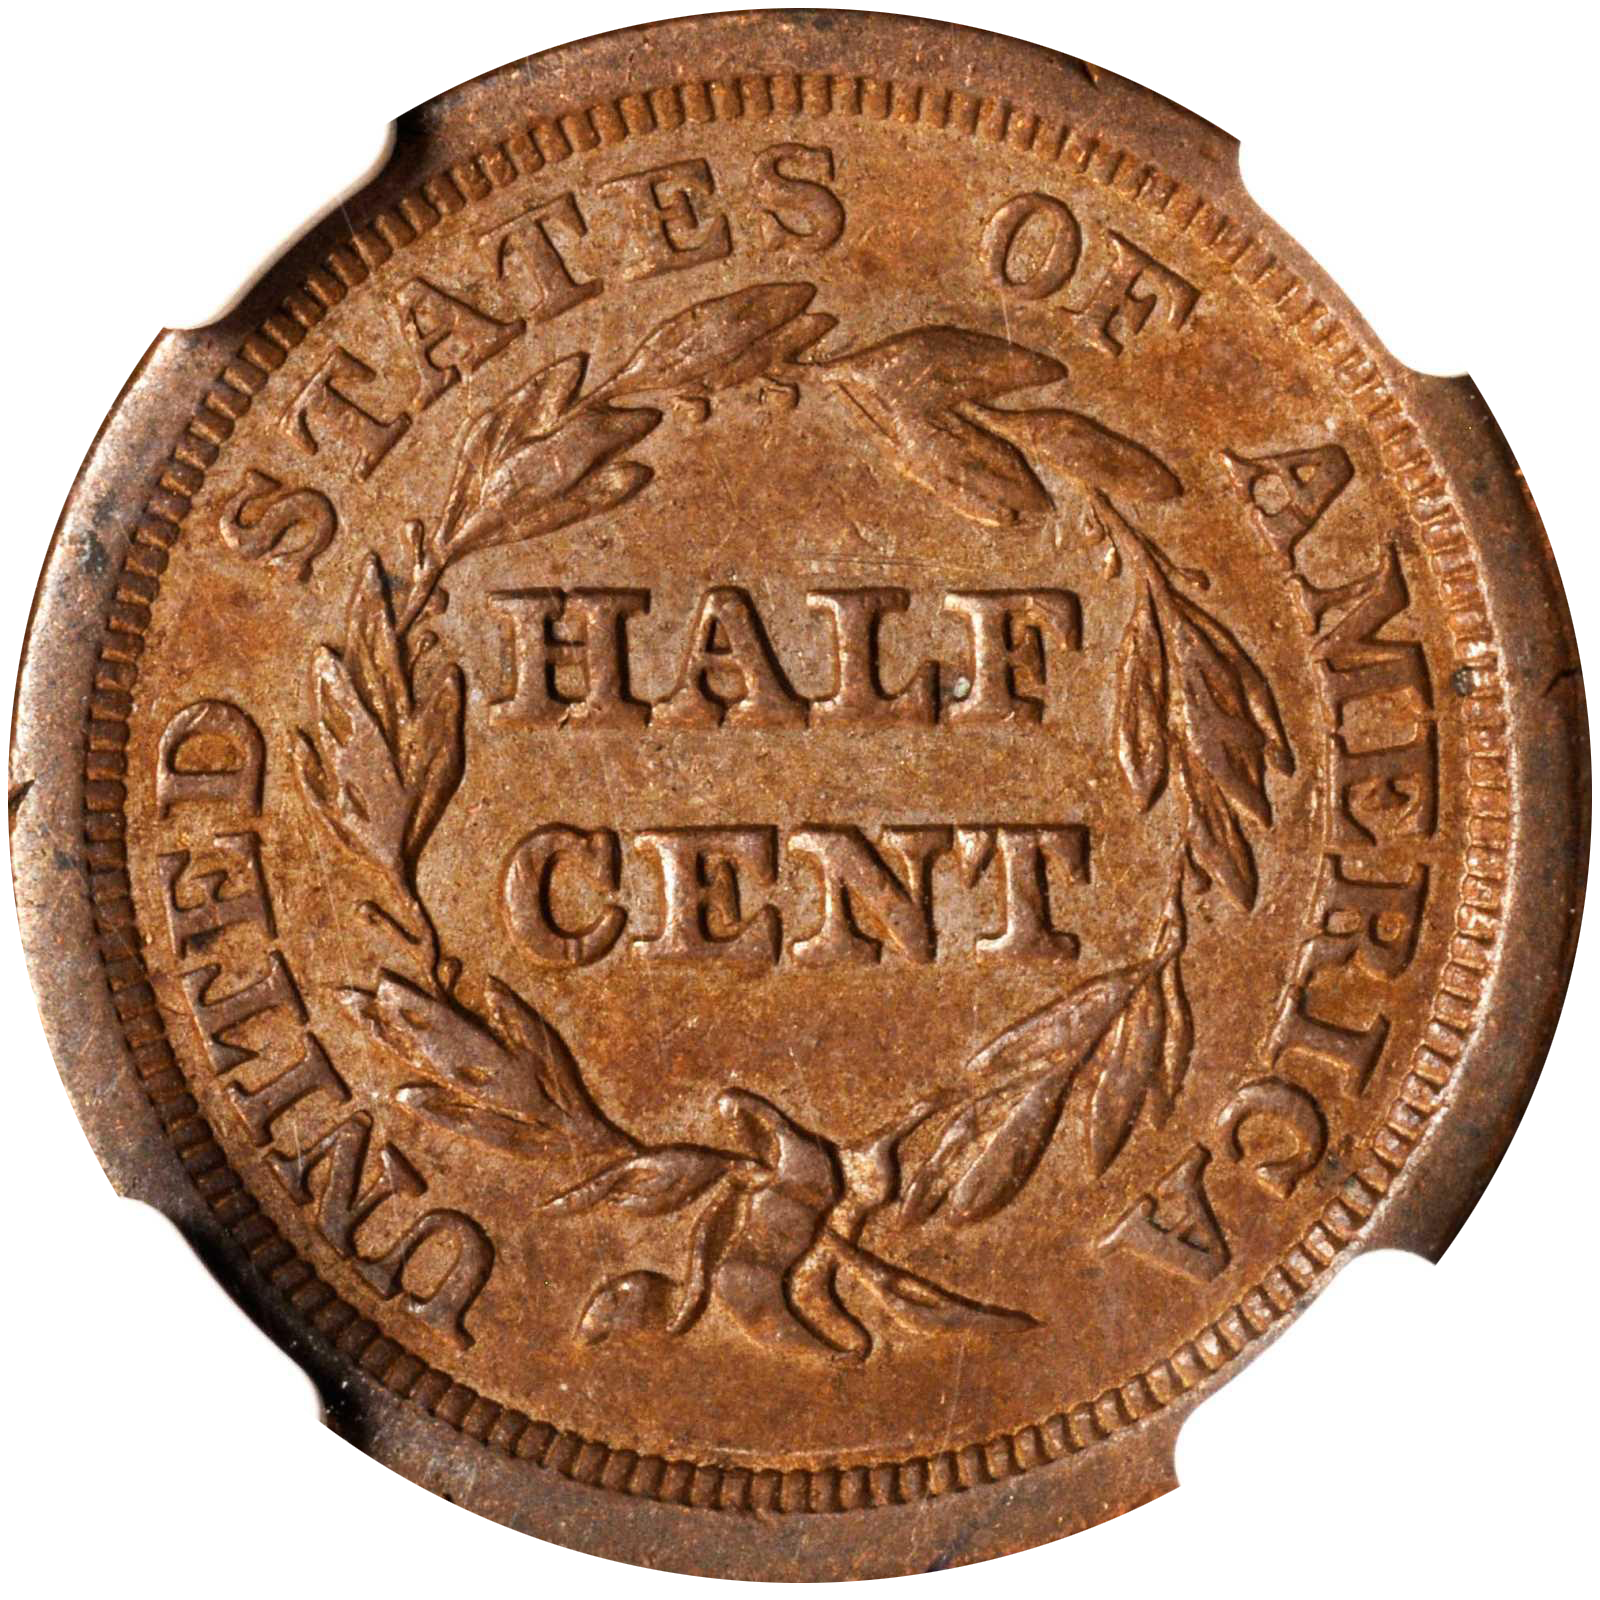 Value of 1857 Braided Hair Half Cent